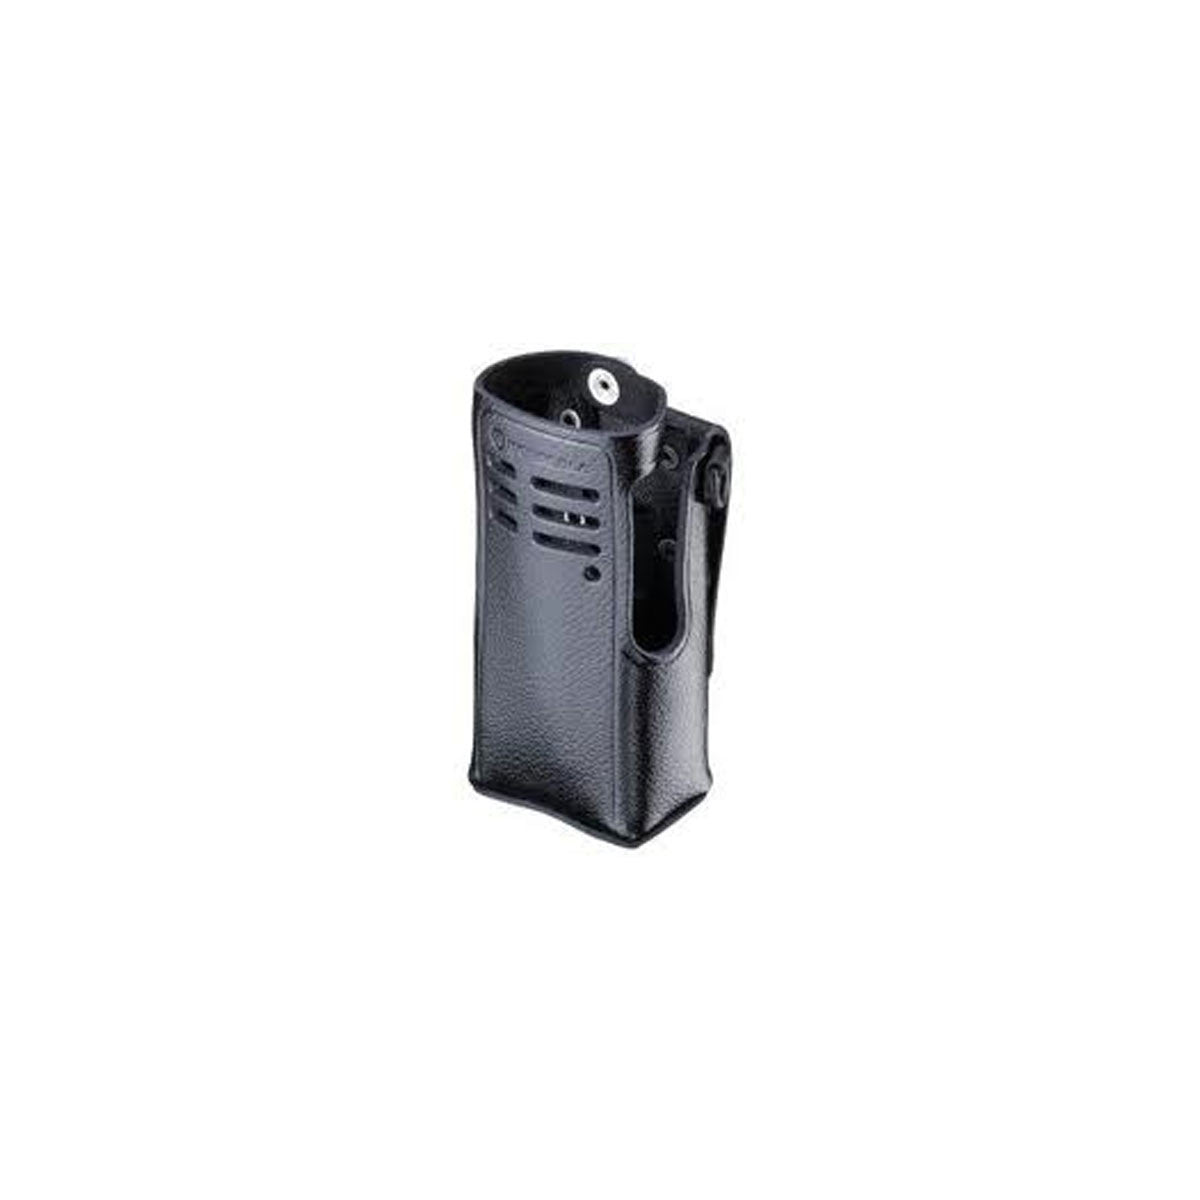 Motorola DEP450 - Leather Carry Case Charge & Go